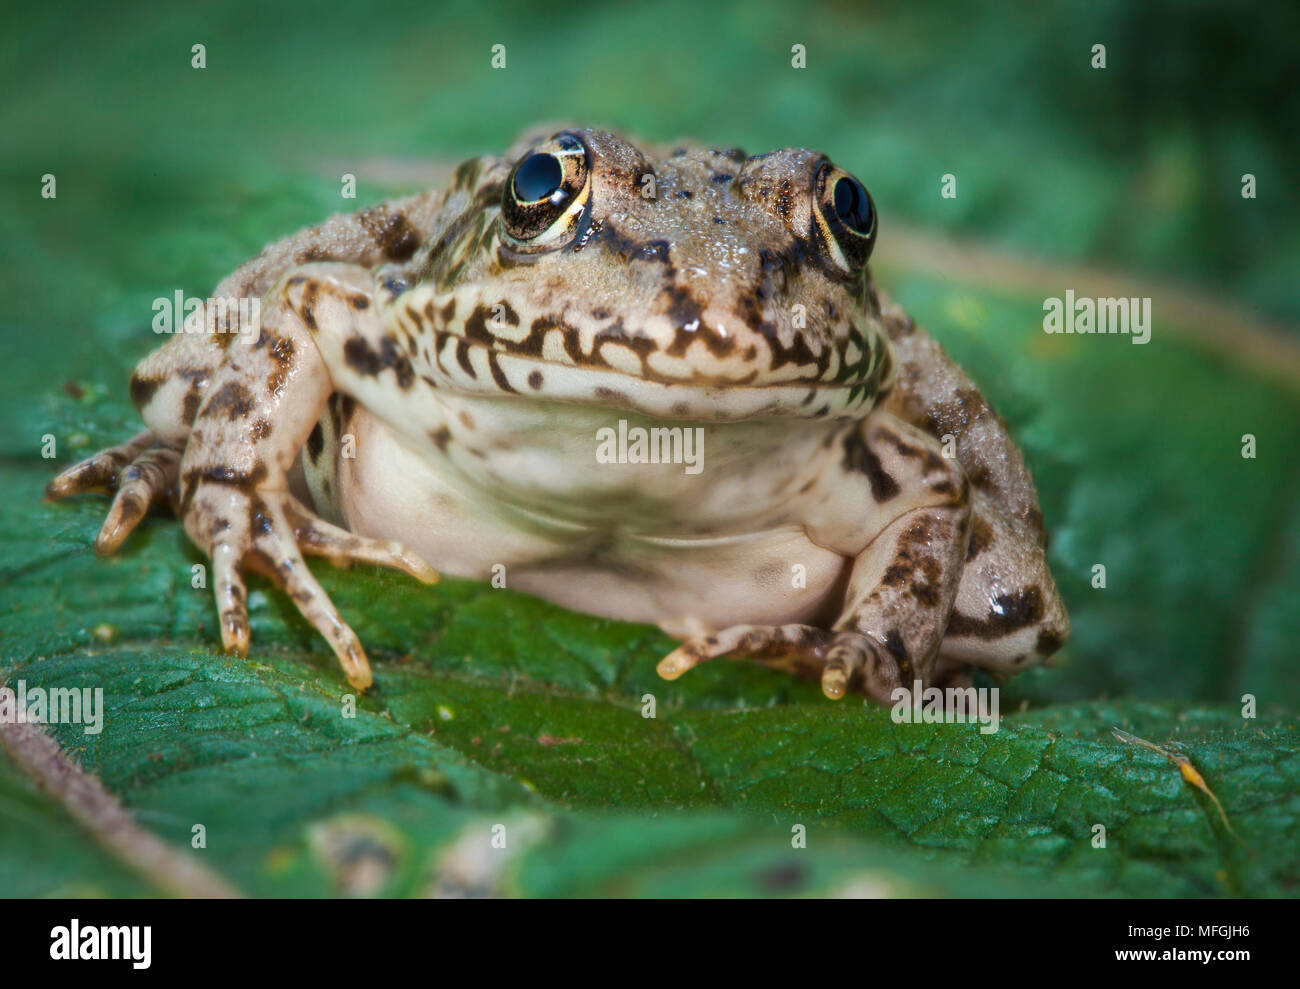 Pool Frog(Pelophylax lessonae syn. Rana lessonae), Fam. Ranidae, Karben, Hessen, Germany Stock Photo